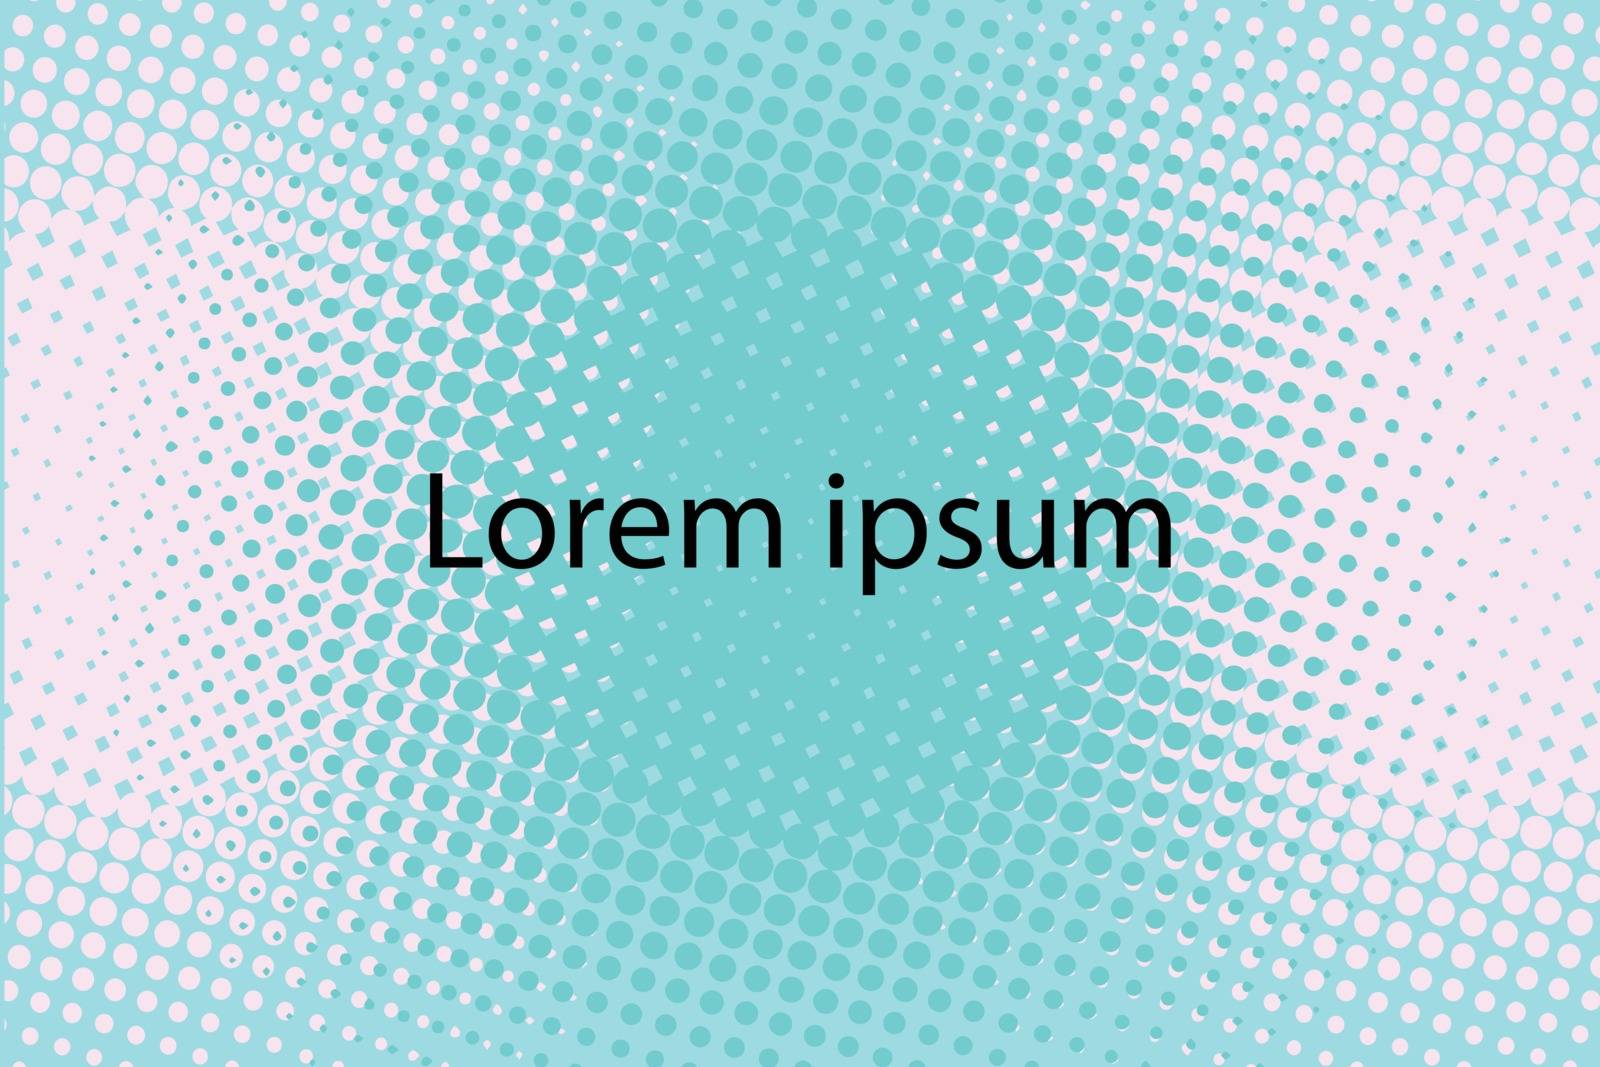 Lorem ipsum green abstract pop art retro background by studiostoks